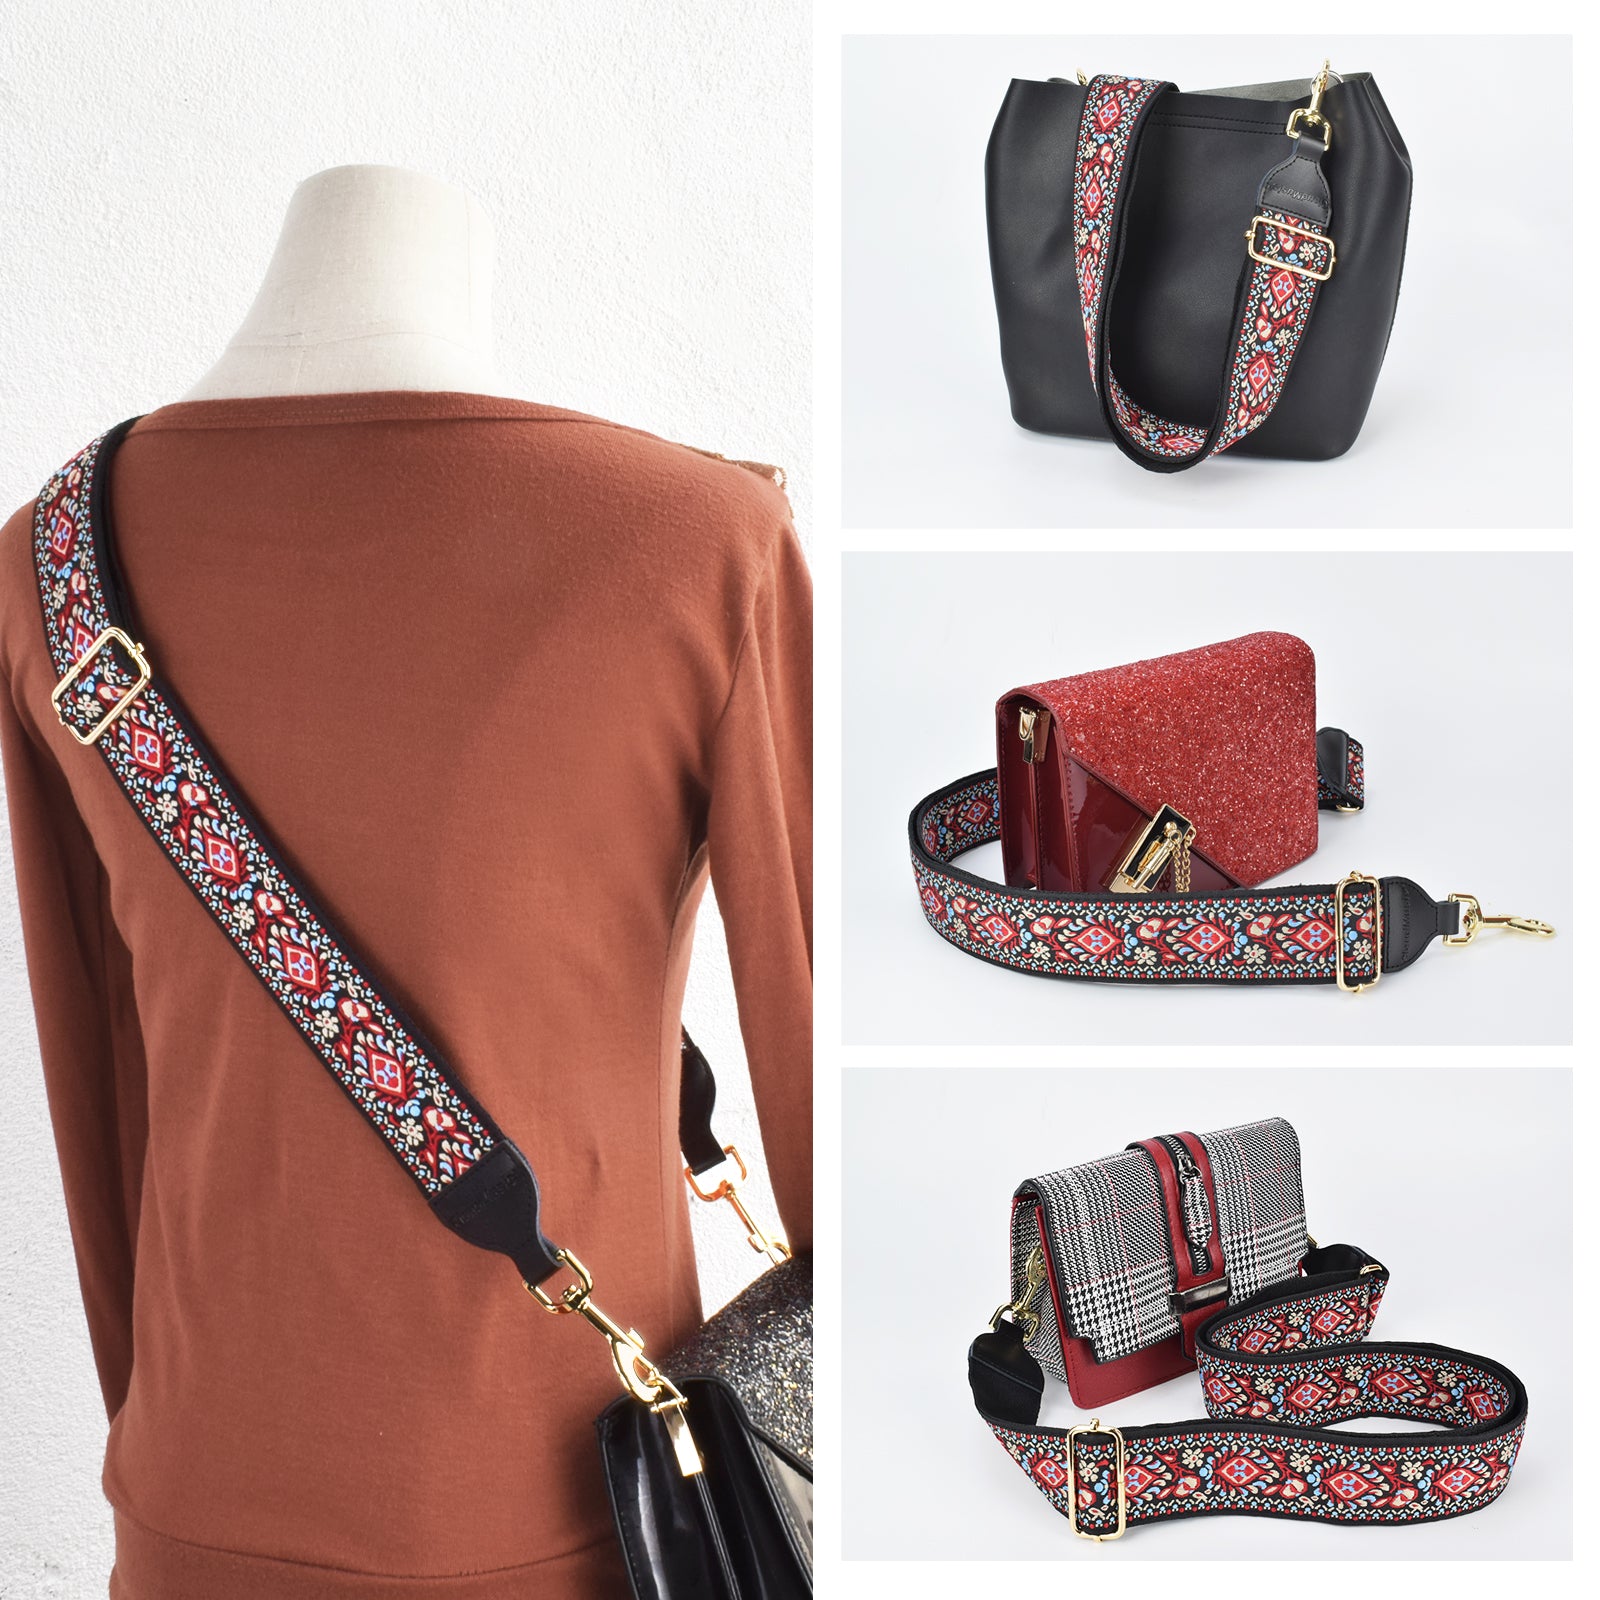 Adjustable Strap Bag, Guitar Strap Handbag, Accessory for Bags